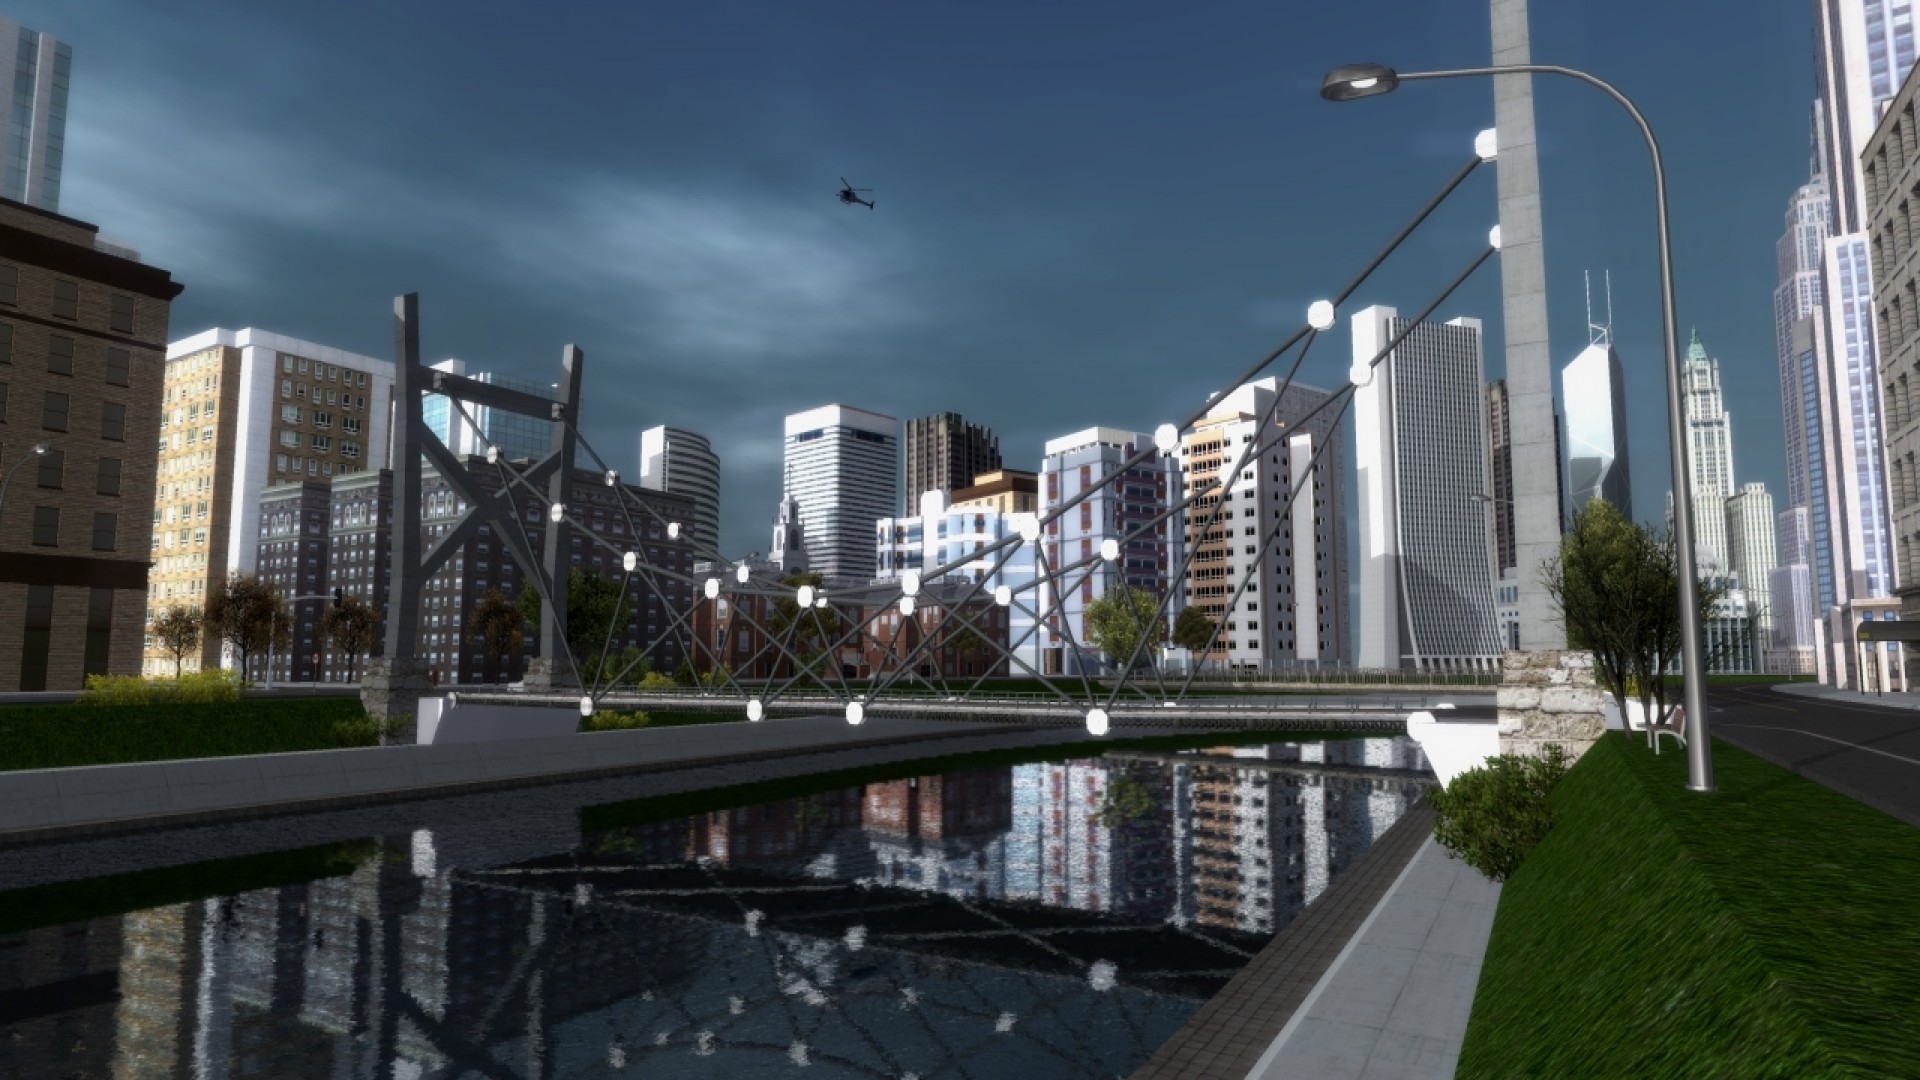 Bridge Project screenshot